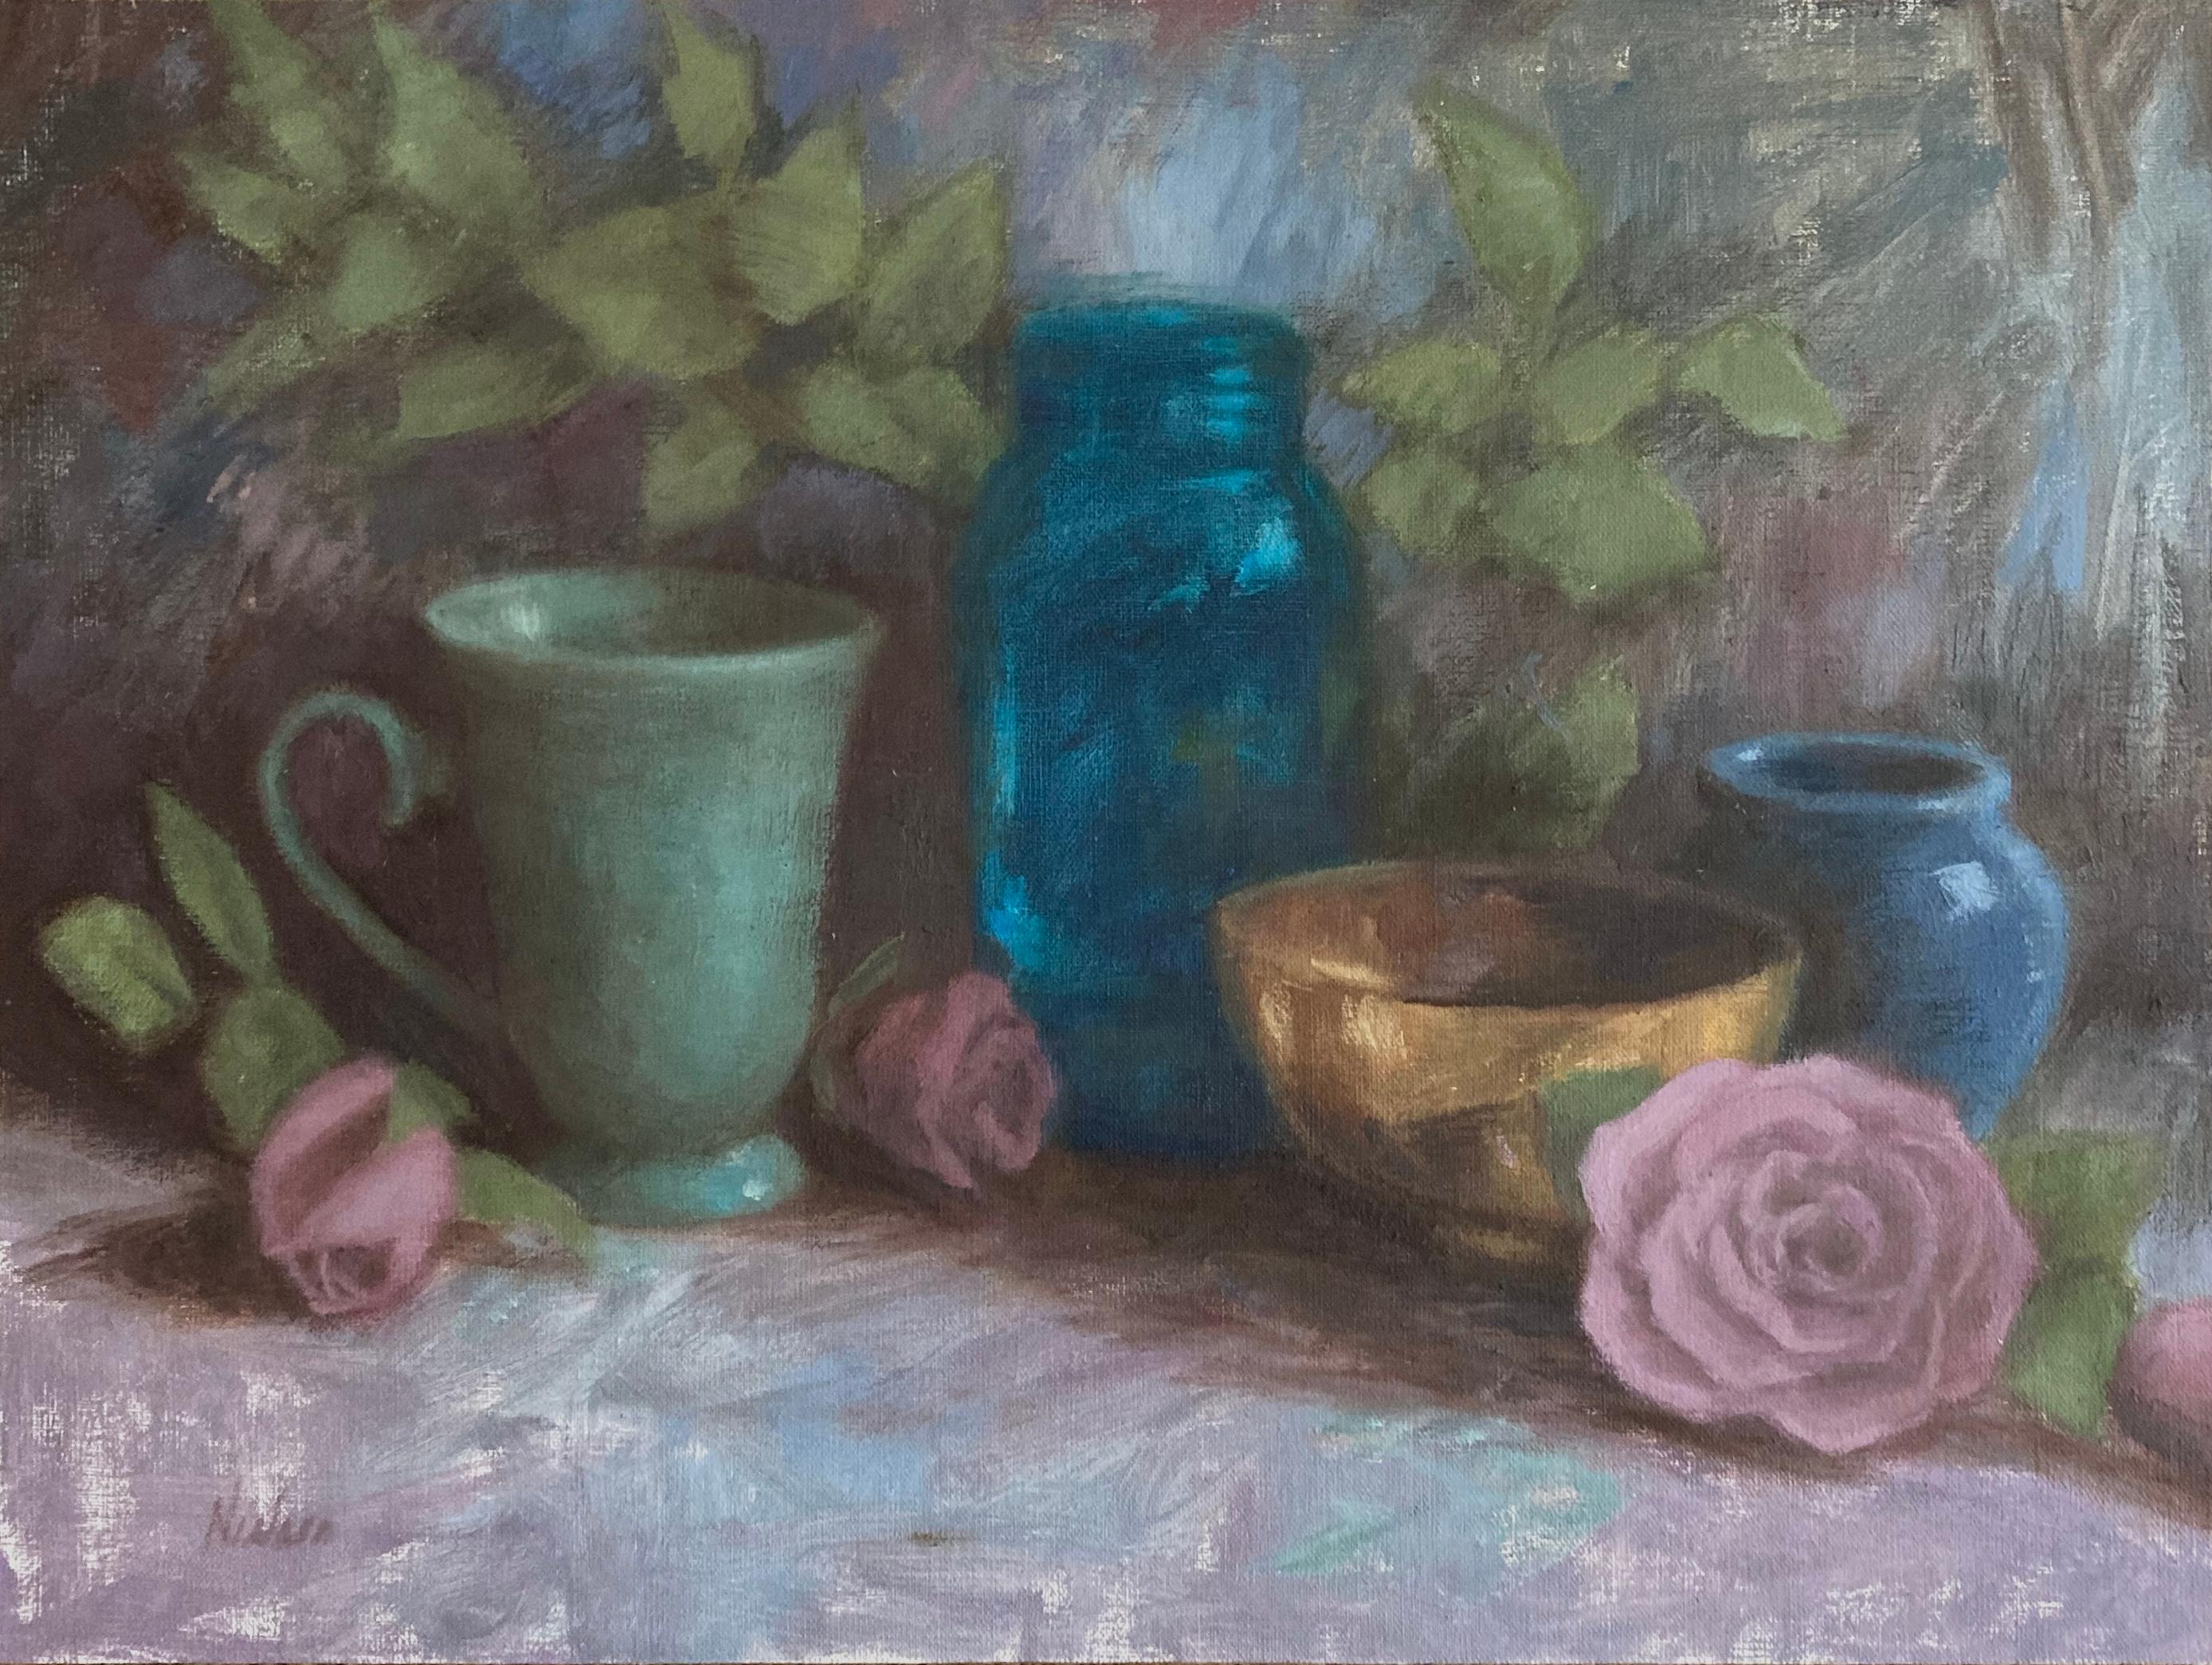 Teal Cup and Aqua Jar, Oil Painting - Art by Lisa Nielsen